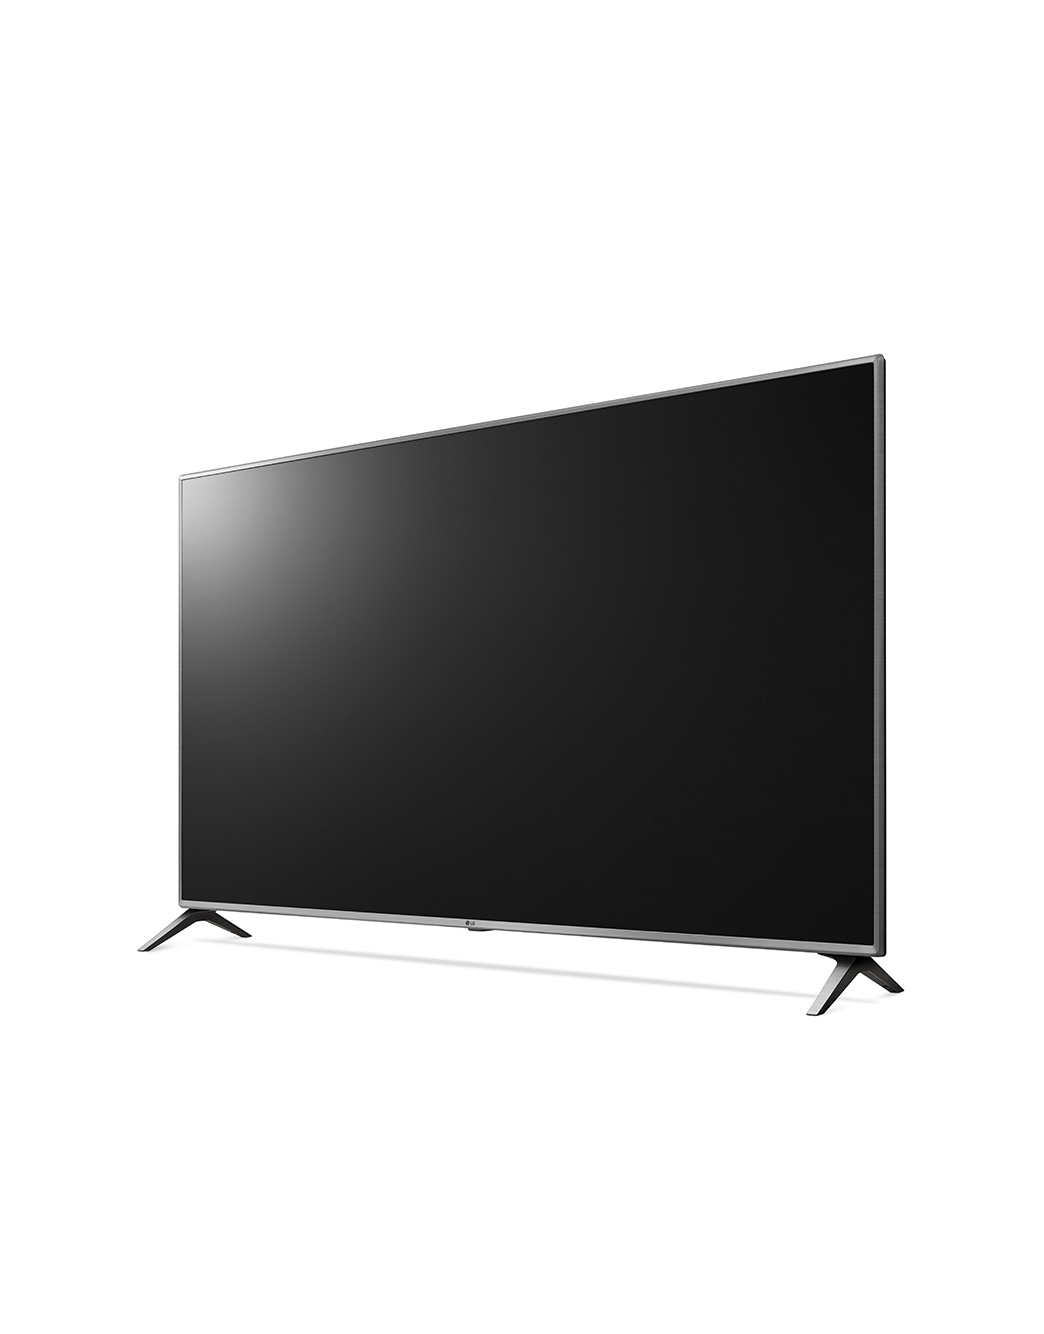 LG UHD TV 70 inch UK7000 Series IPS 4K Display 4K HDR Smart LED TV w